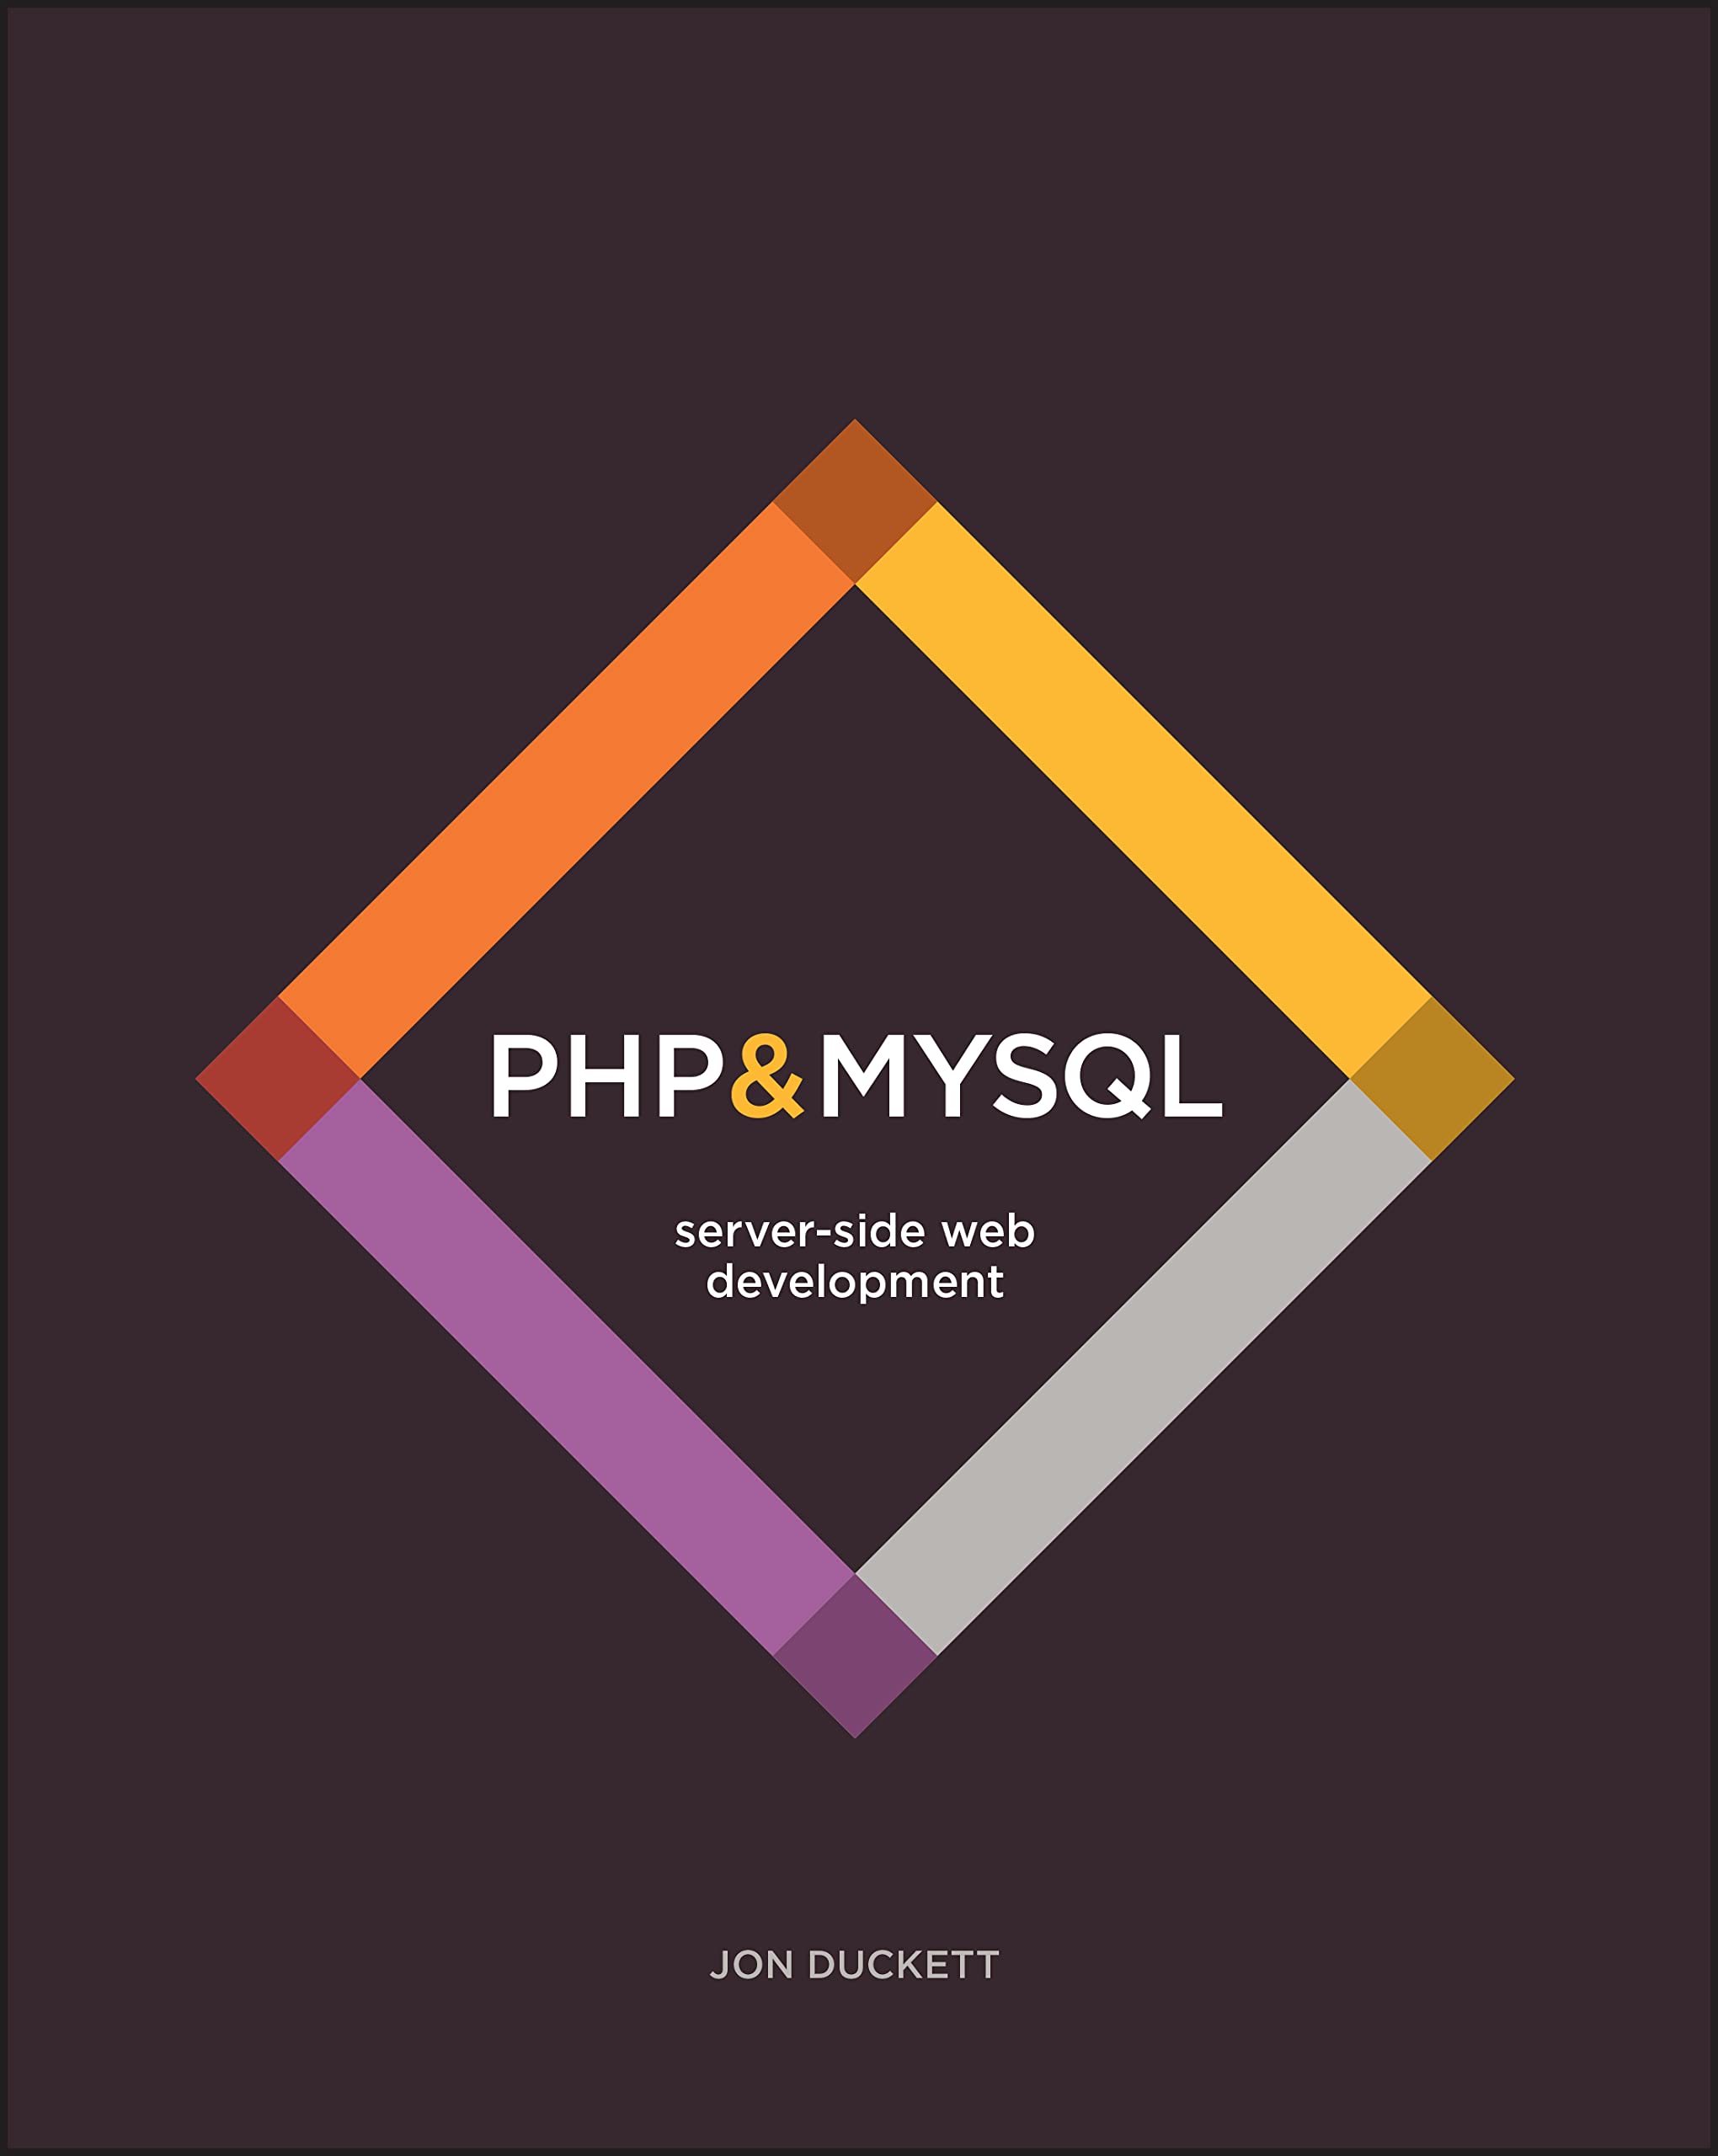 PHP and MySQL